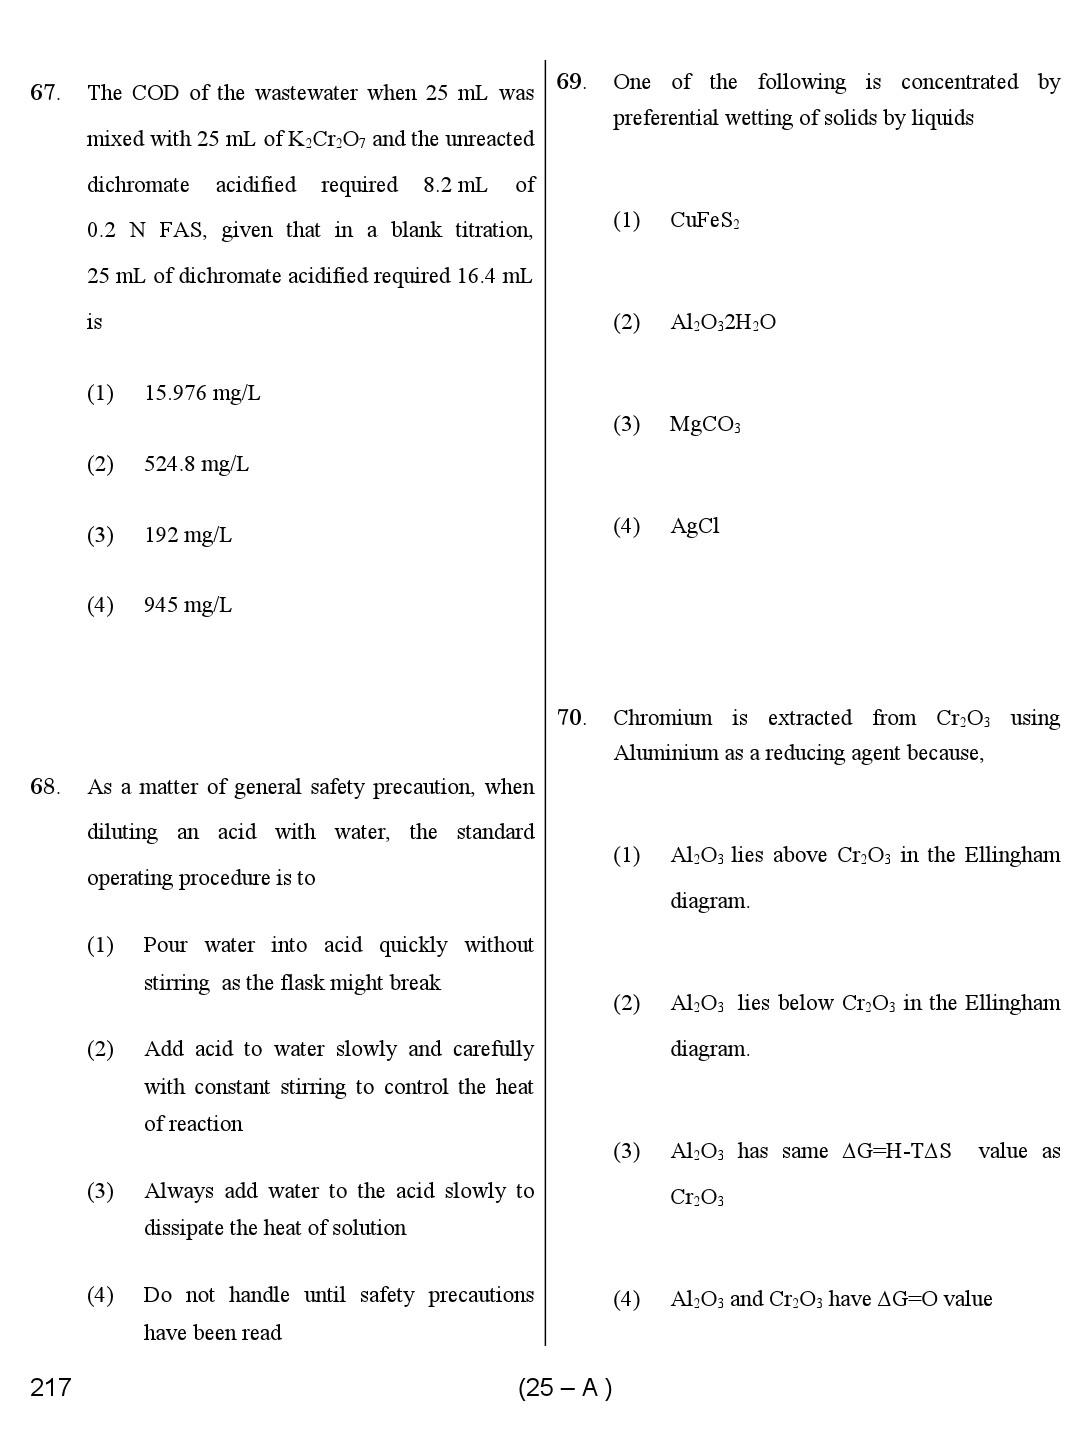 Karnataka PSC Chemist Exam Sample Question Paper 25